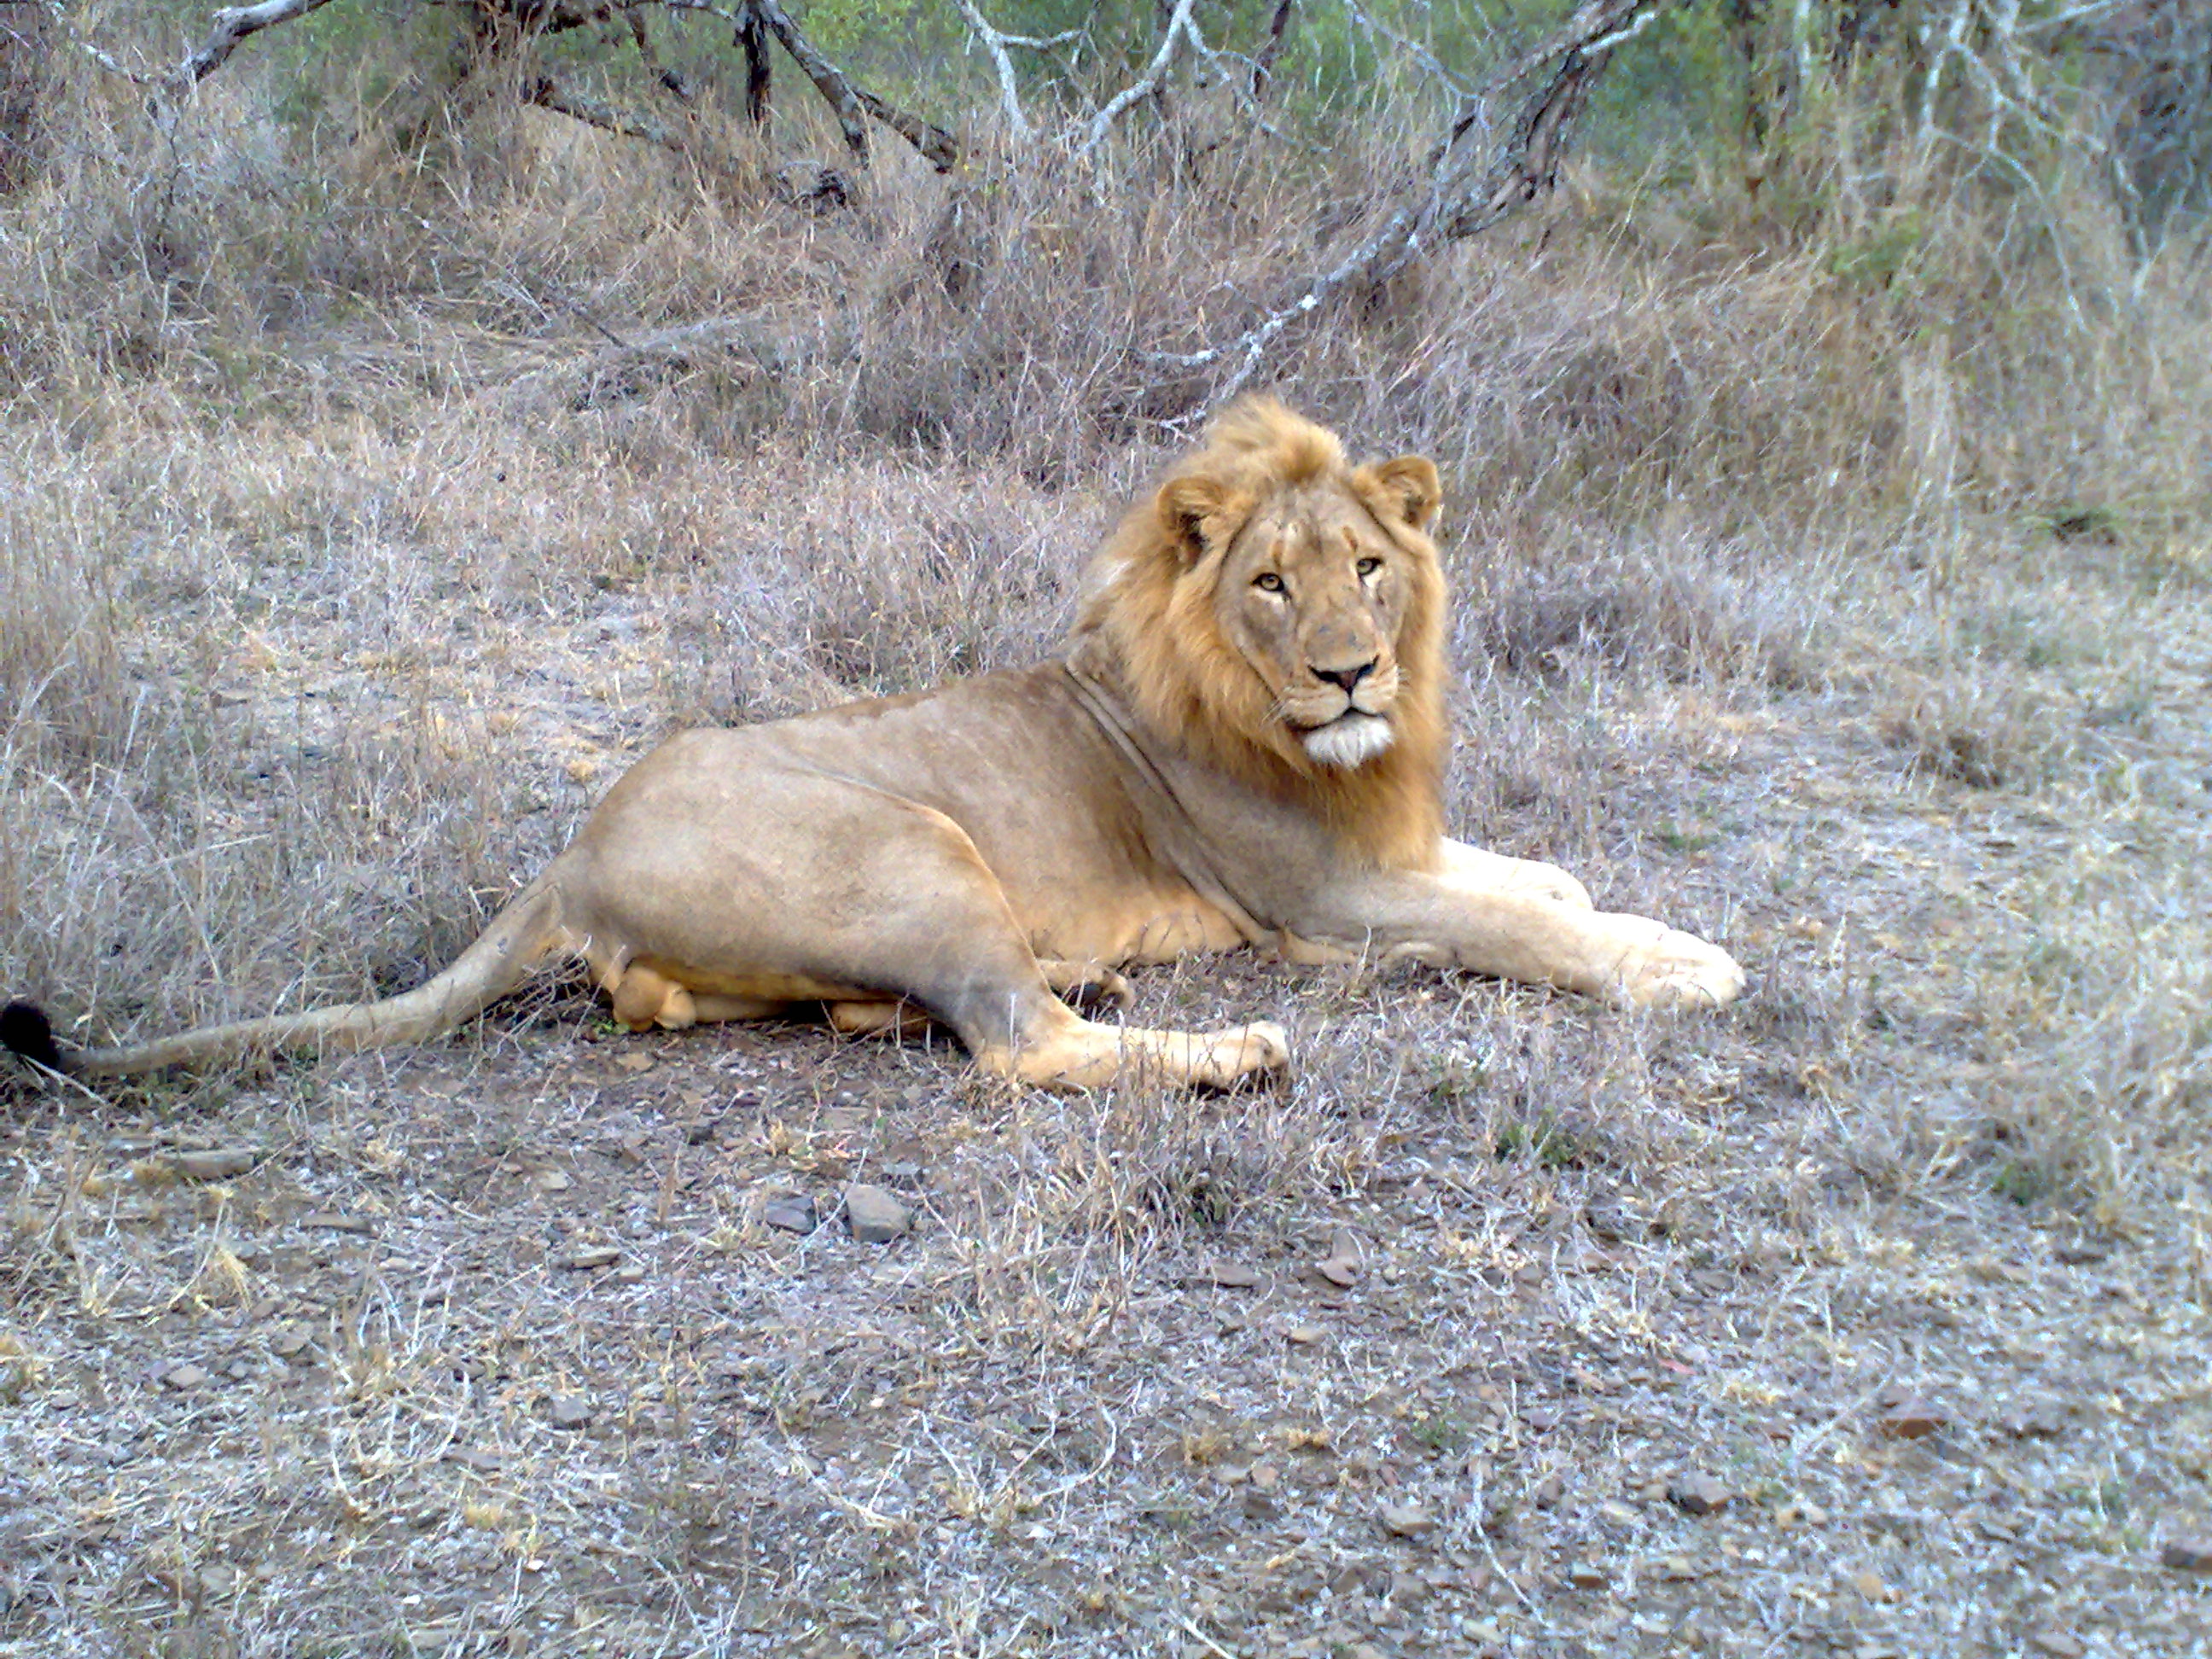 Thanda Lion